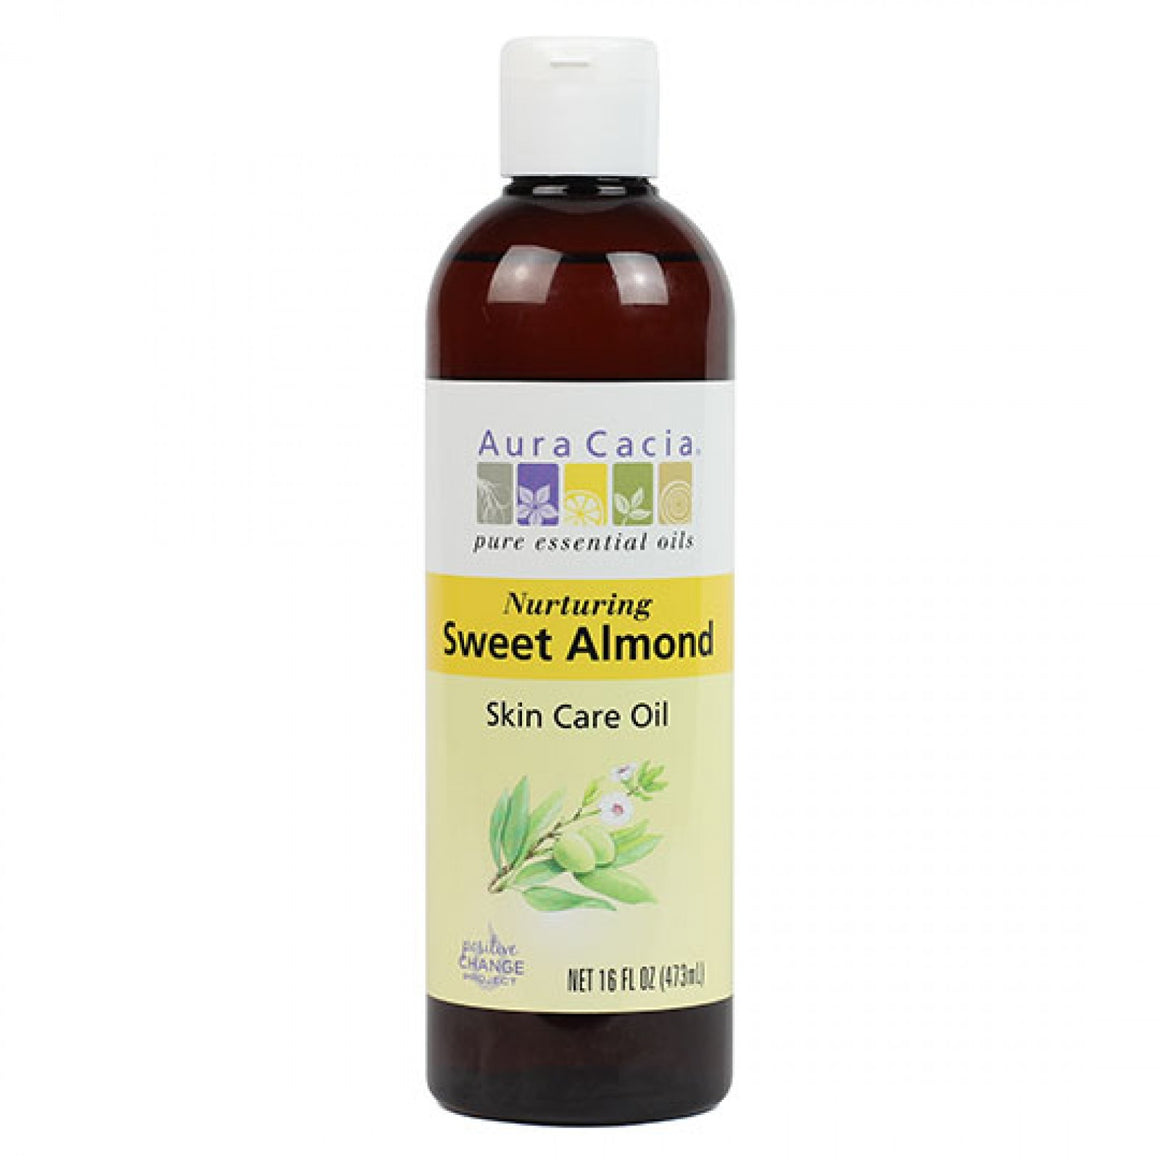 A bottle of Aura Cacia Sweet Almond Skin Care Oil 16 fl oz